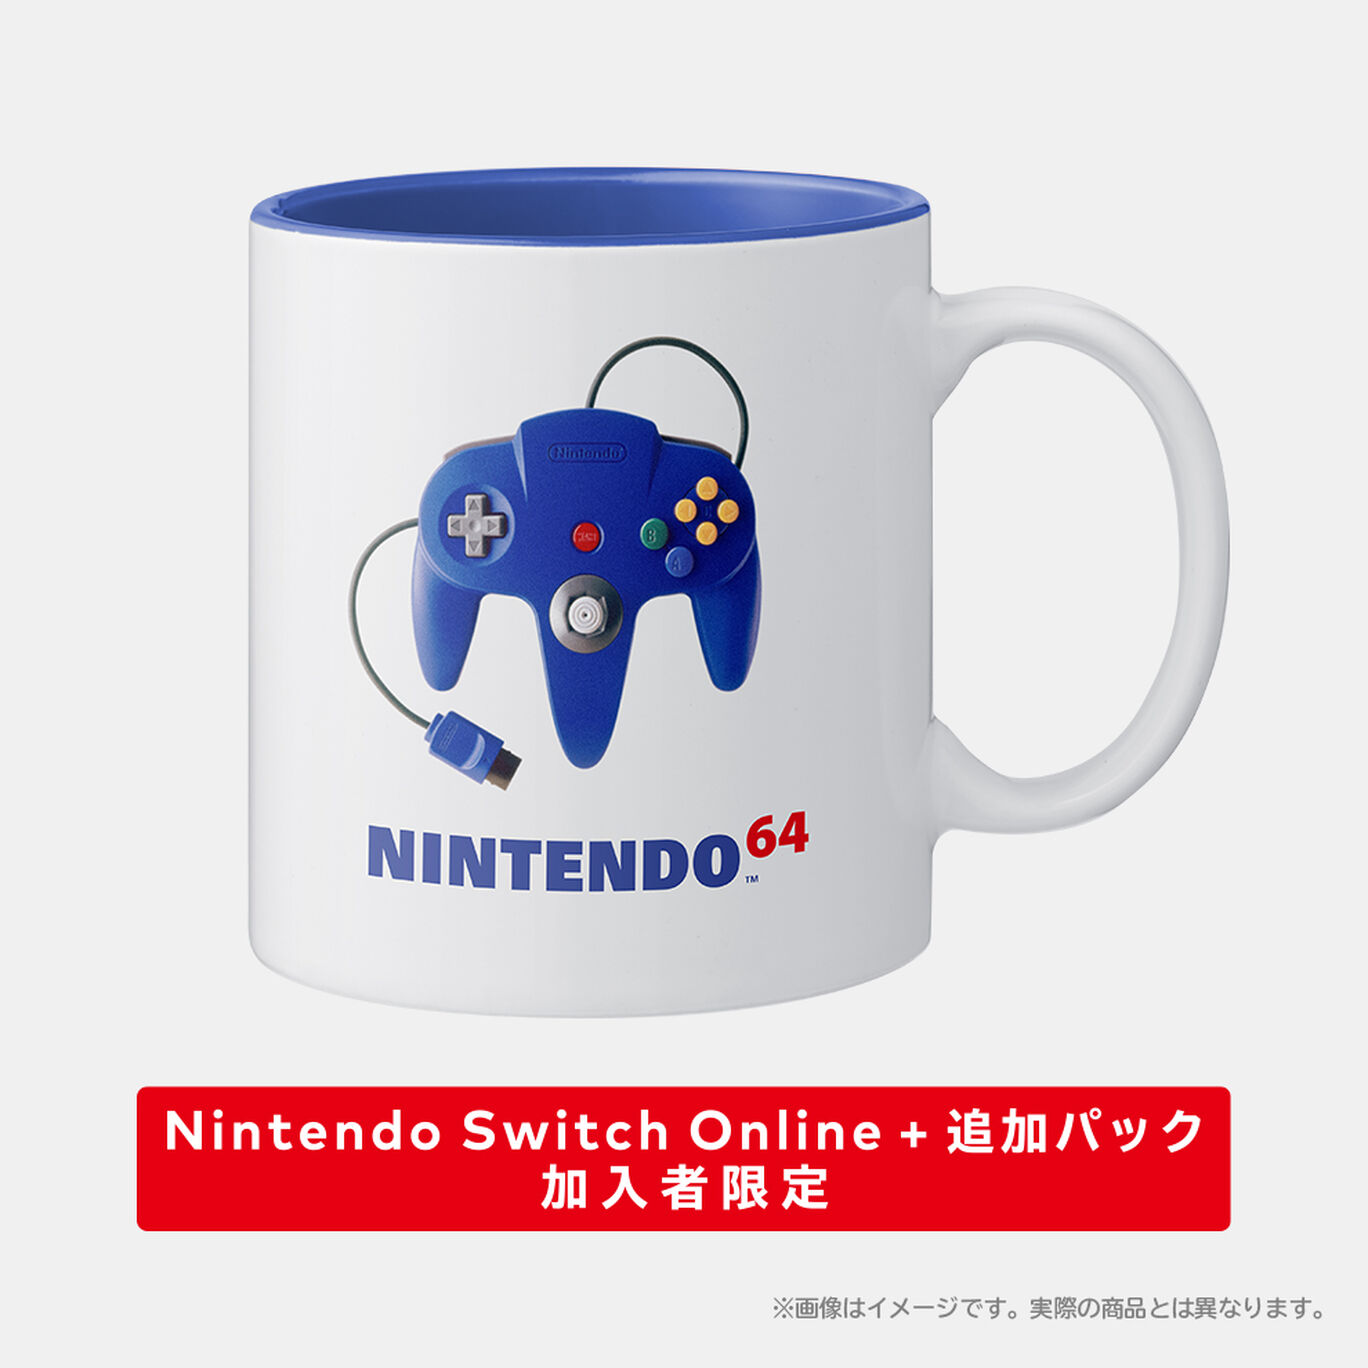 Nintendo Switch Online ＋ 追加パック加入者限定 マグカップ NINTENDO 64 コントローラ ブロス ブルー